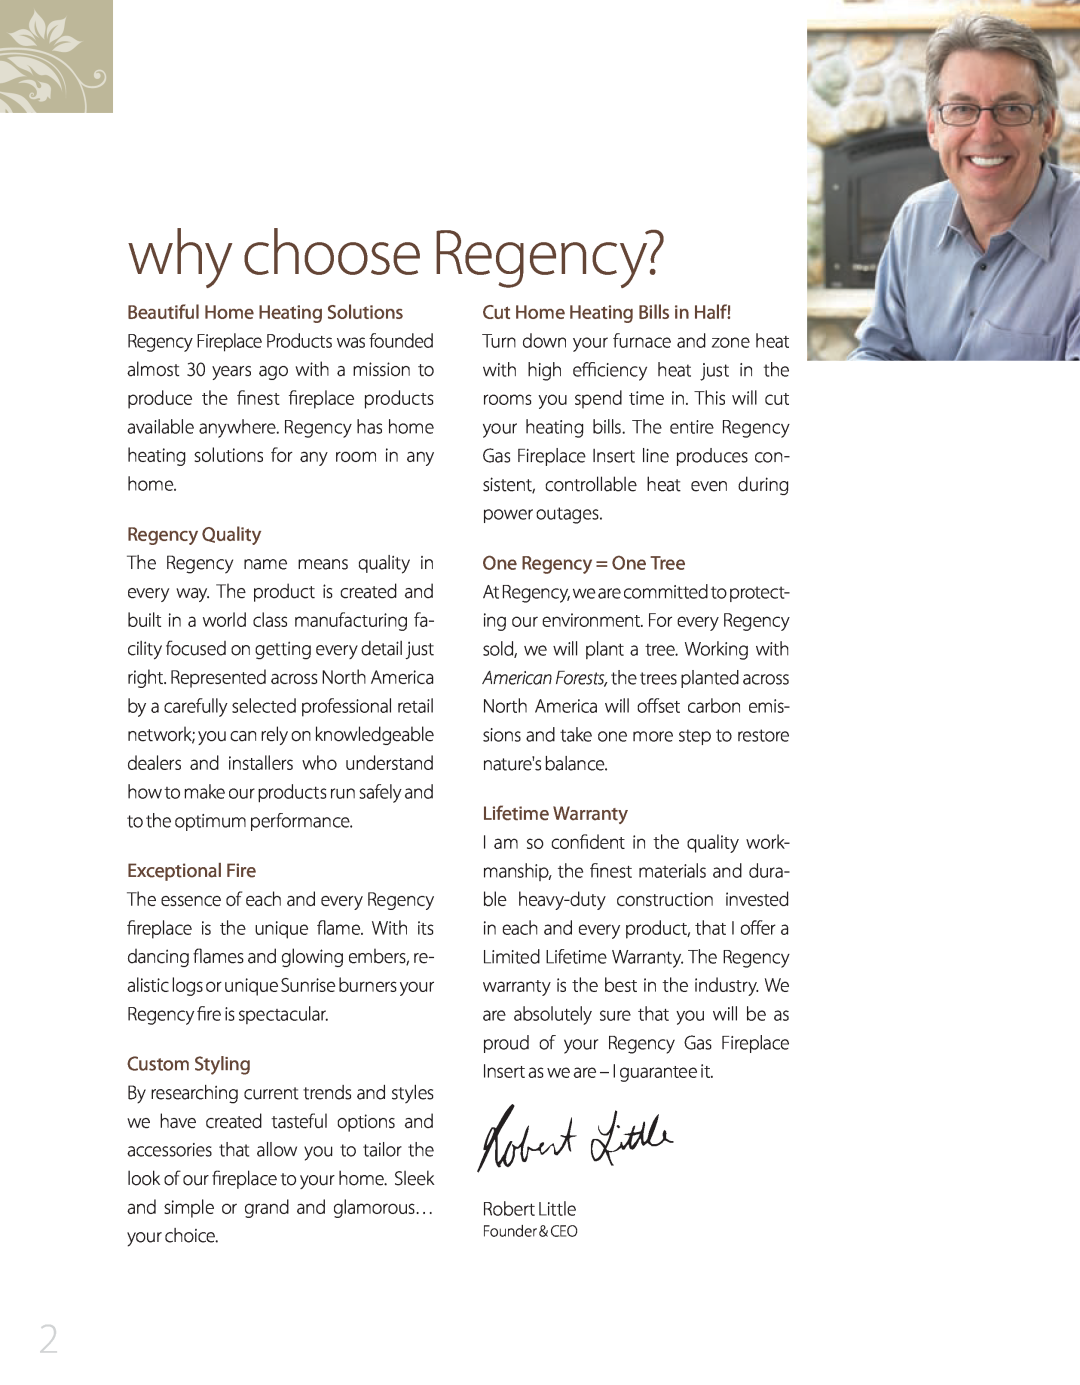 Regency L234 manual why choose Regency?, Regency Quality, Exceptional Fire, Custom Styling, Cut Home Heating Bills in Half 